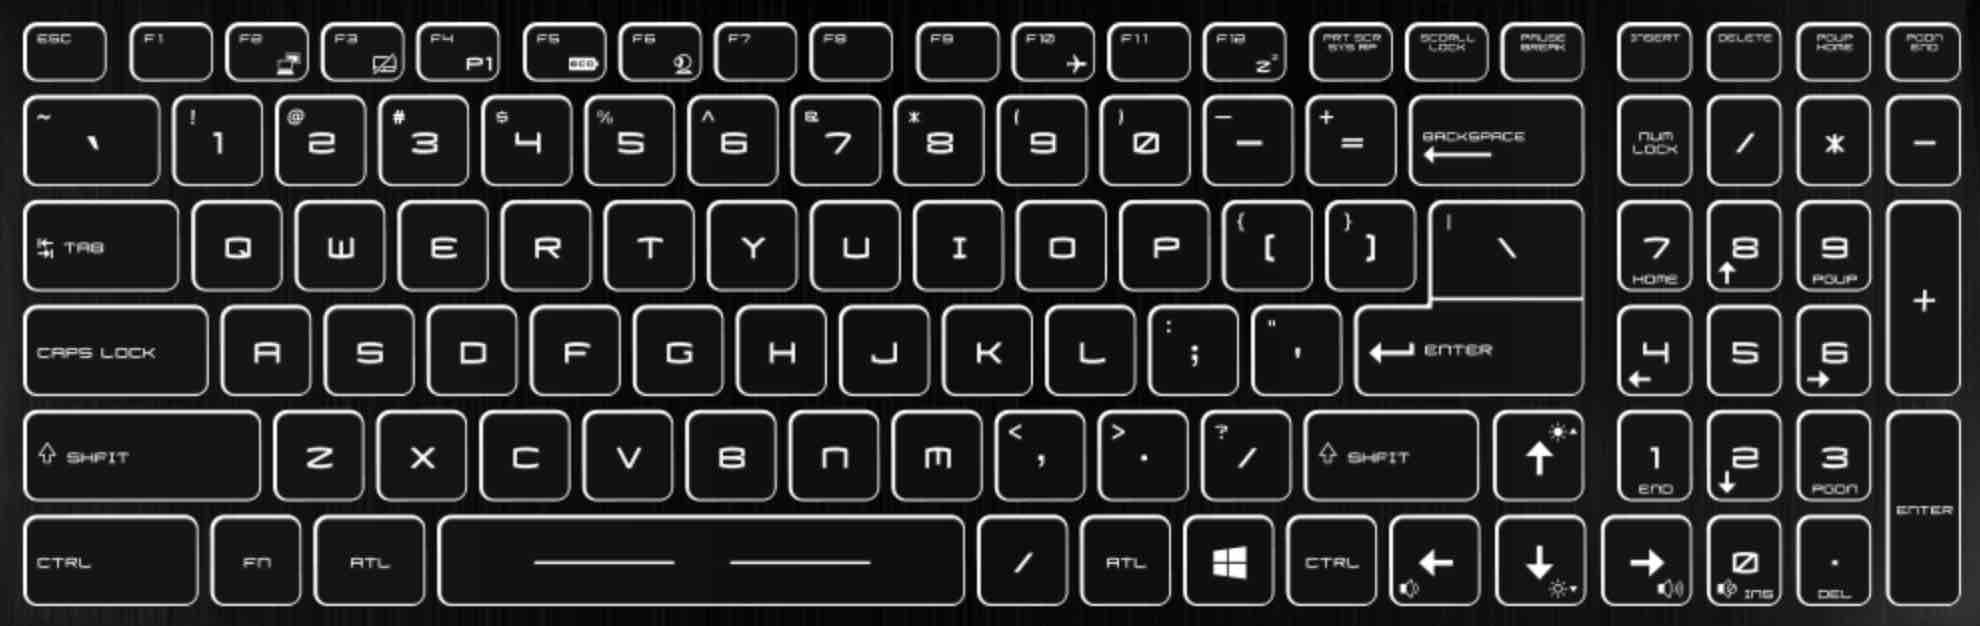 msi-17m-keyboard-key-replacement.jpg